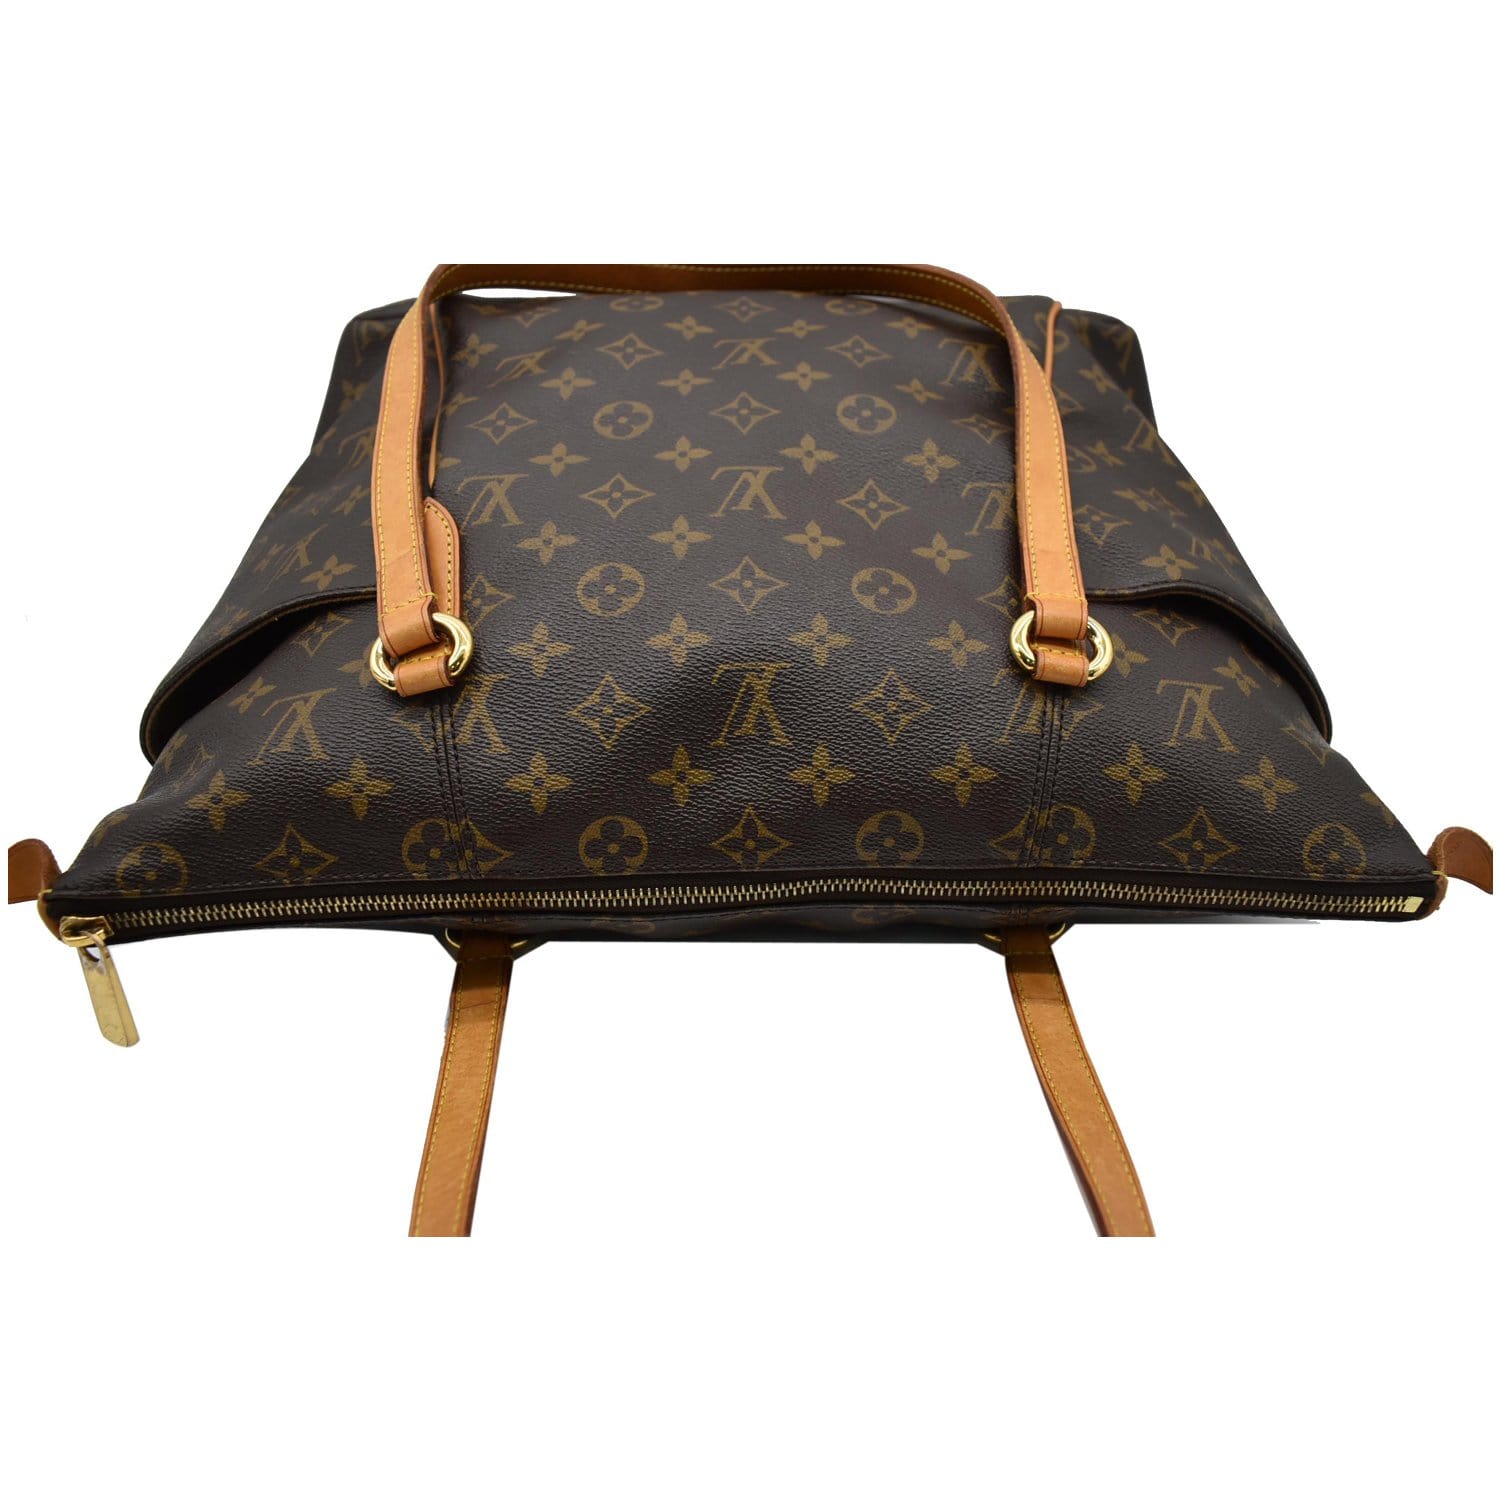 Louis Vuitton Totally MM Shoulder Bag in Monogram Canvas, Mint Condition